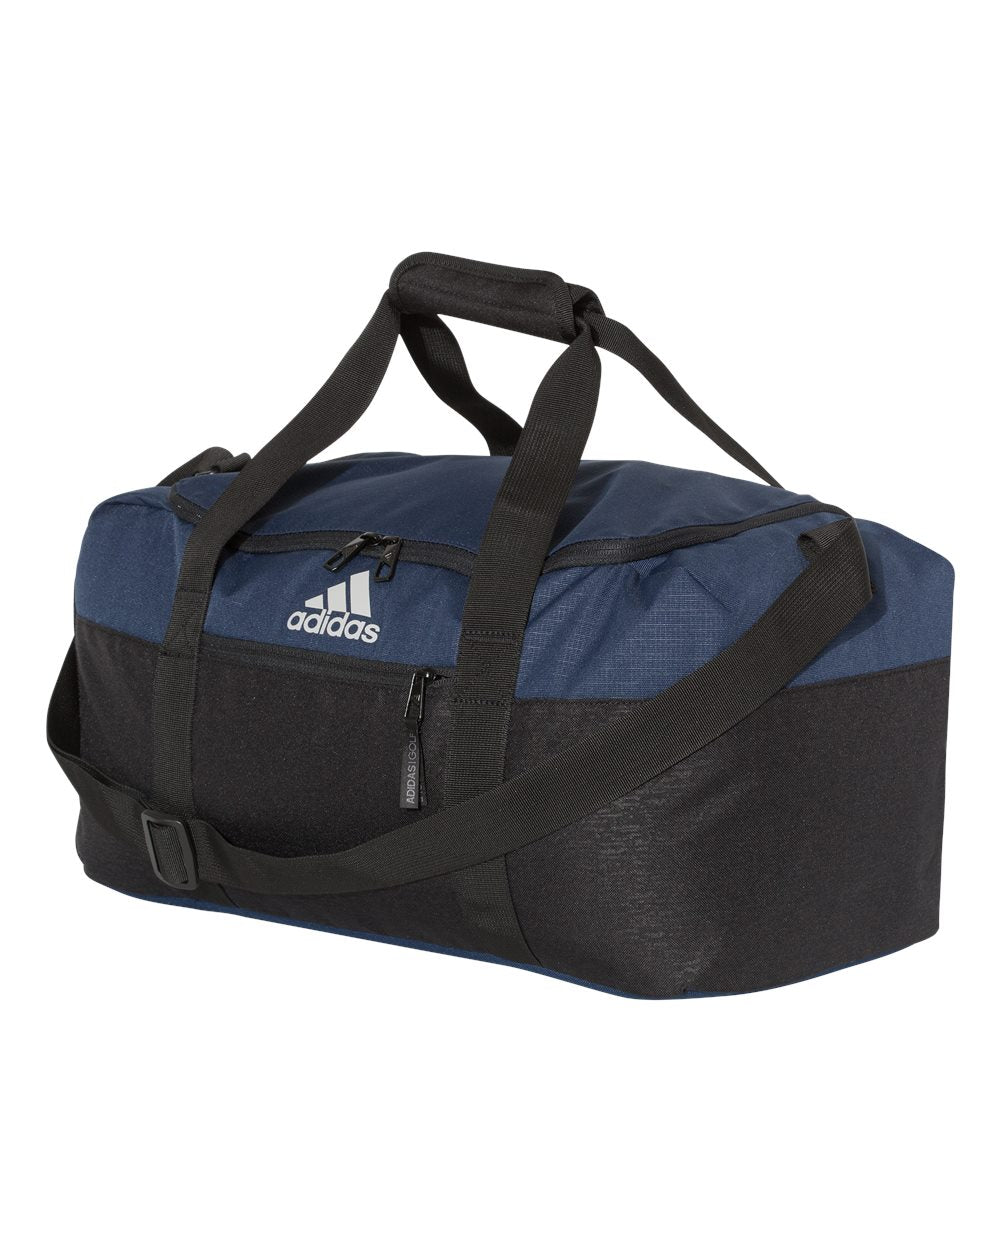 Adidas 35L Weekend Duffel Bag-4